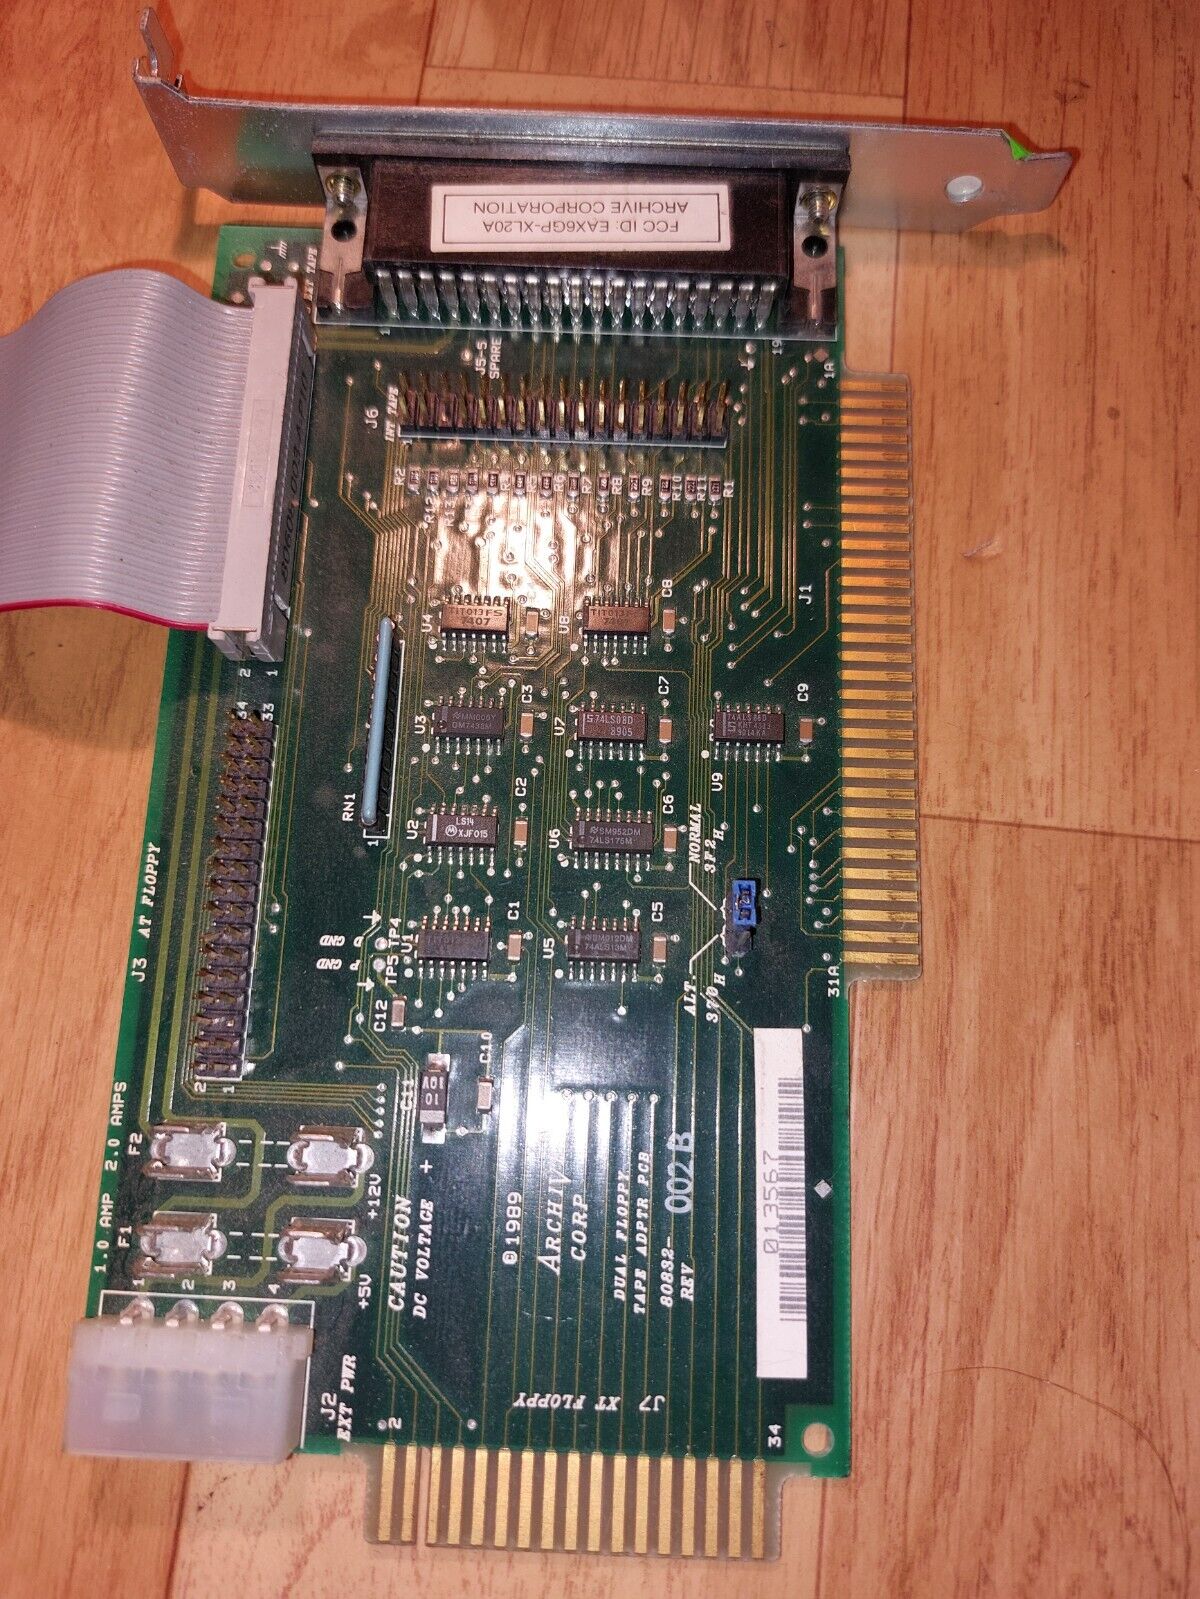 Archive Corp Dual Floppy Tape Adaptr PCB 80832-REV 002B /D11